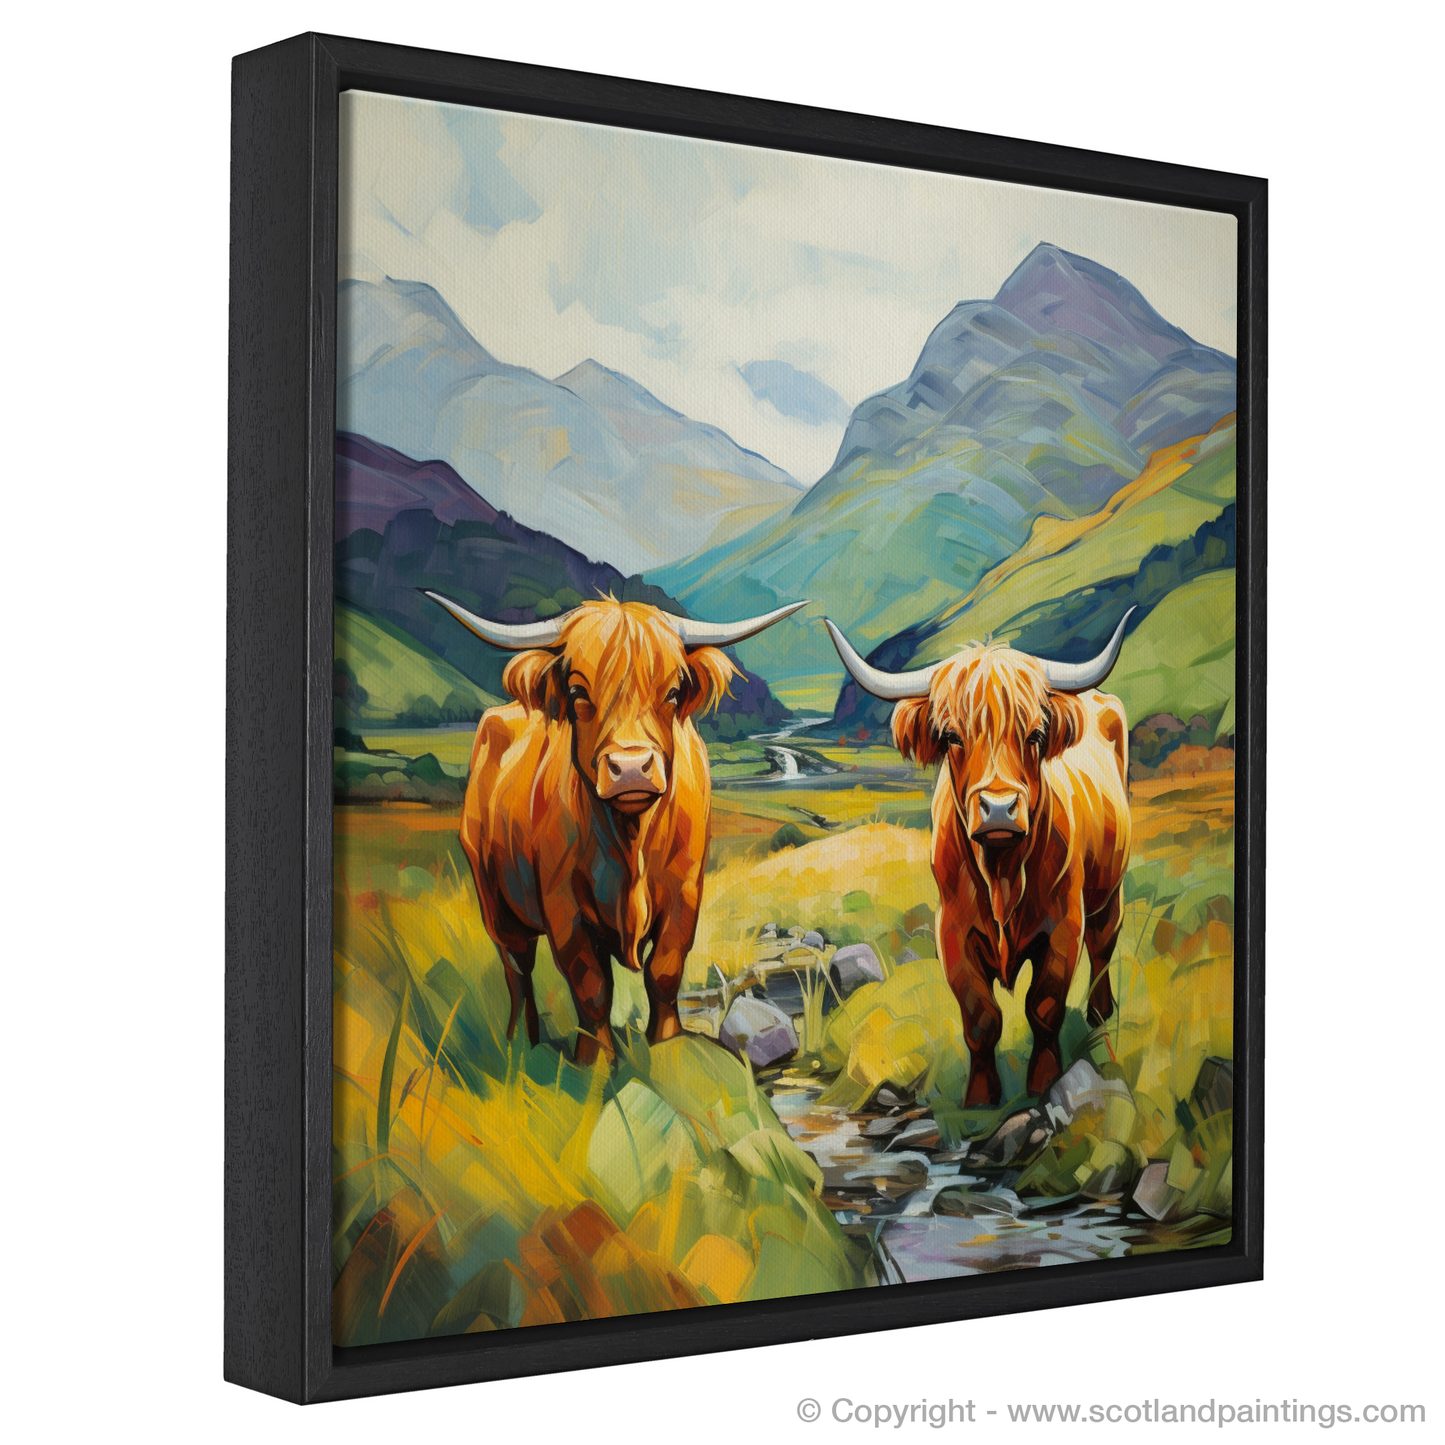 Cubist Cattle of Glencoe Highlands